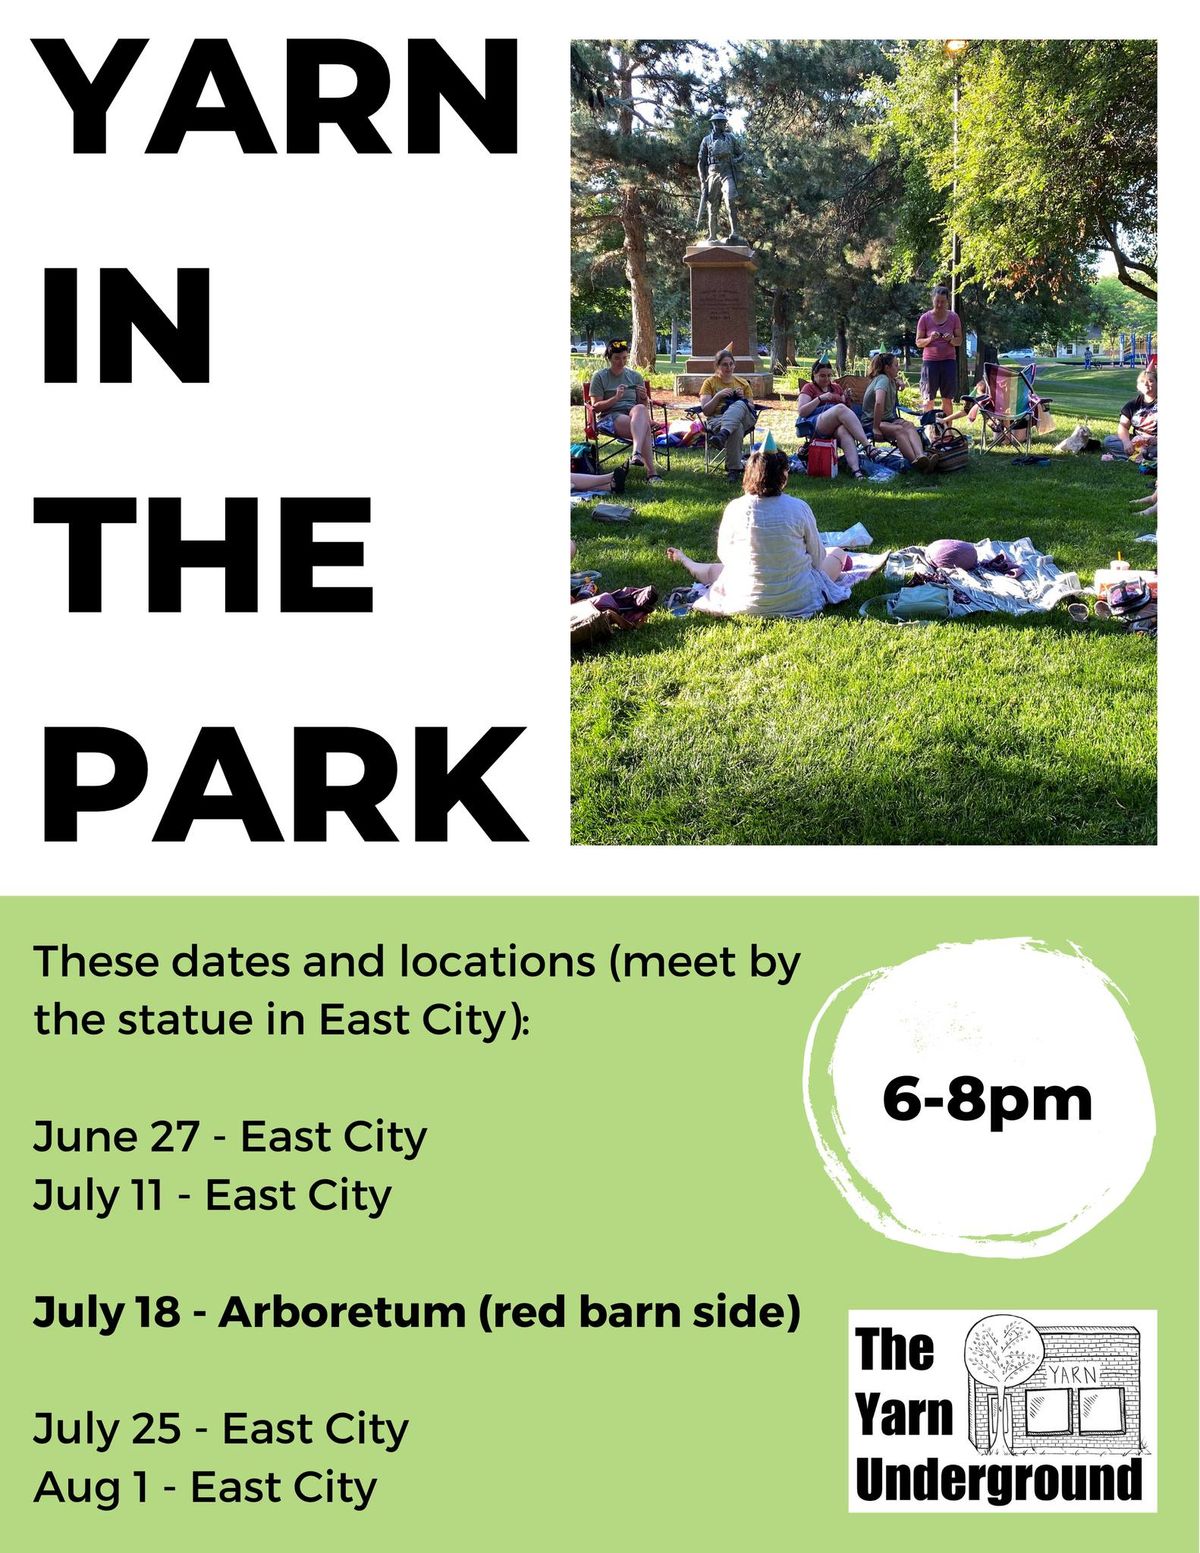 Yarn in the Park - July 25